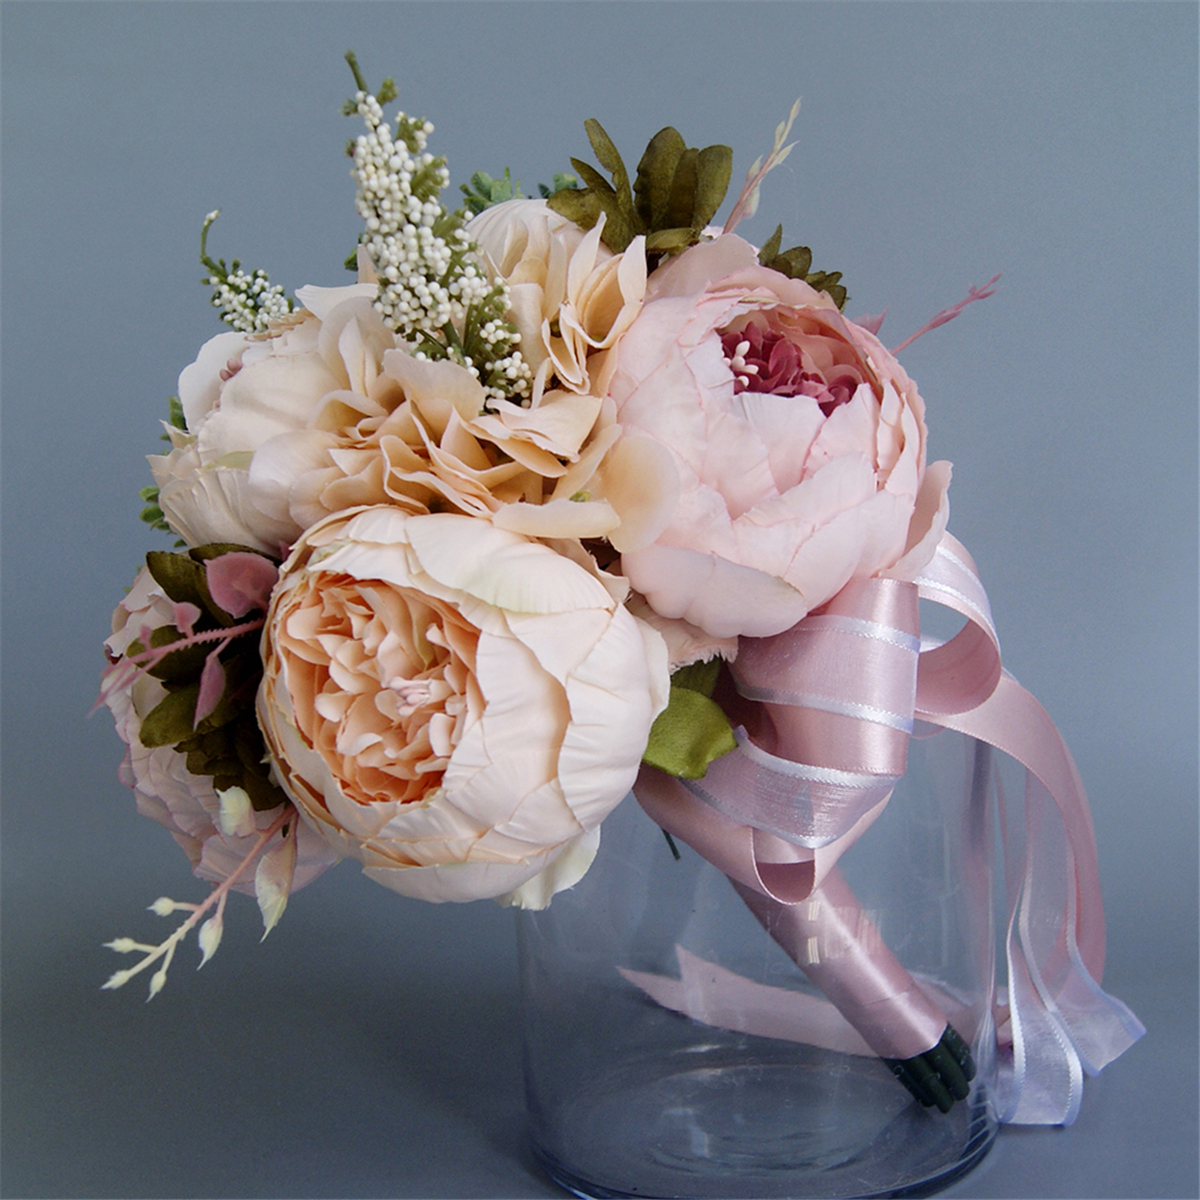 Wedding-Bridal-Bouquets-Handmade-Artificial-Flowers-Decorations-Bride-Accessories-1643090-8